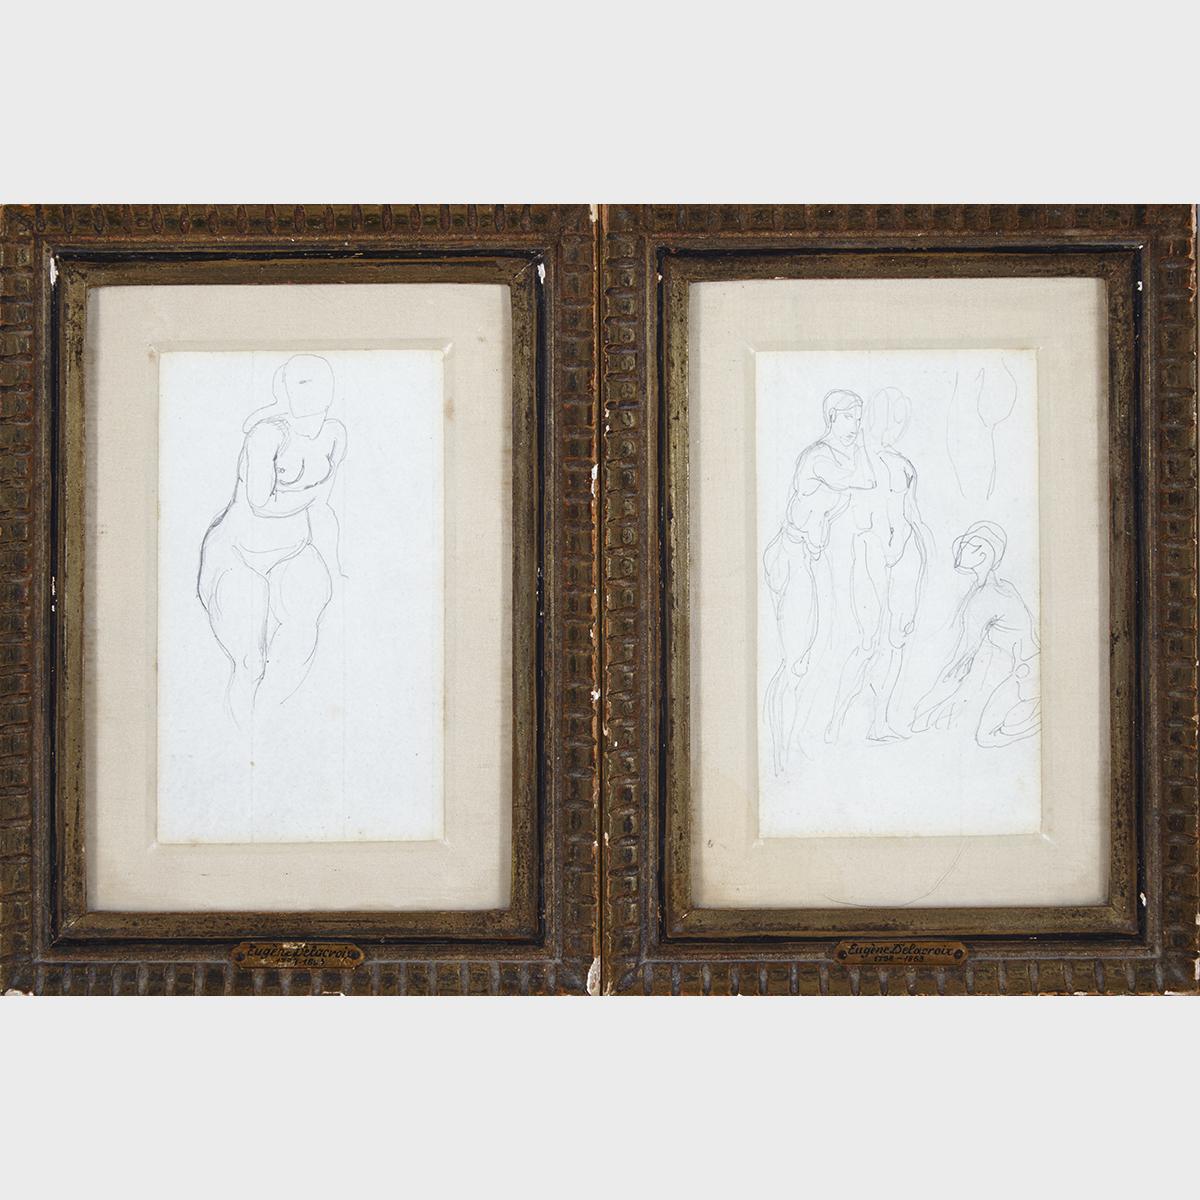 Attributed to Eugene Delacroix (1798-1863)